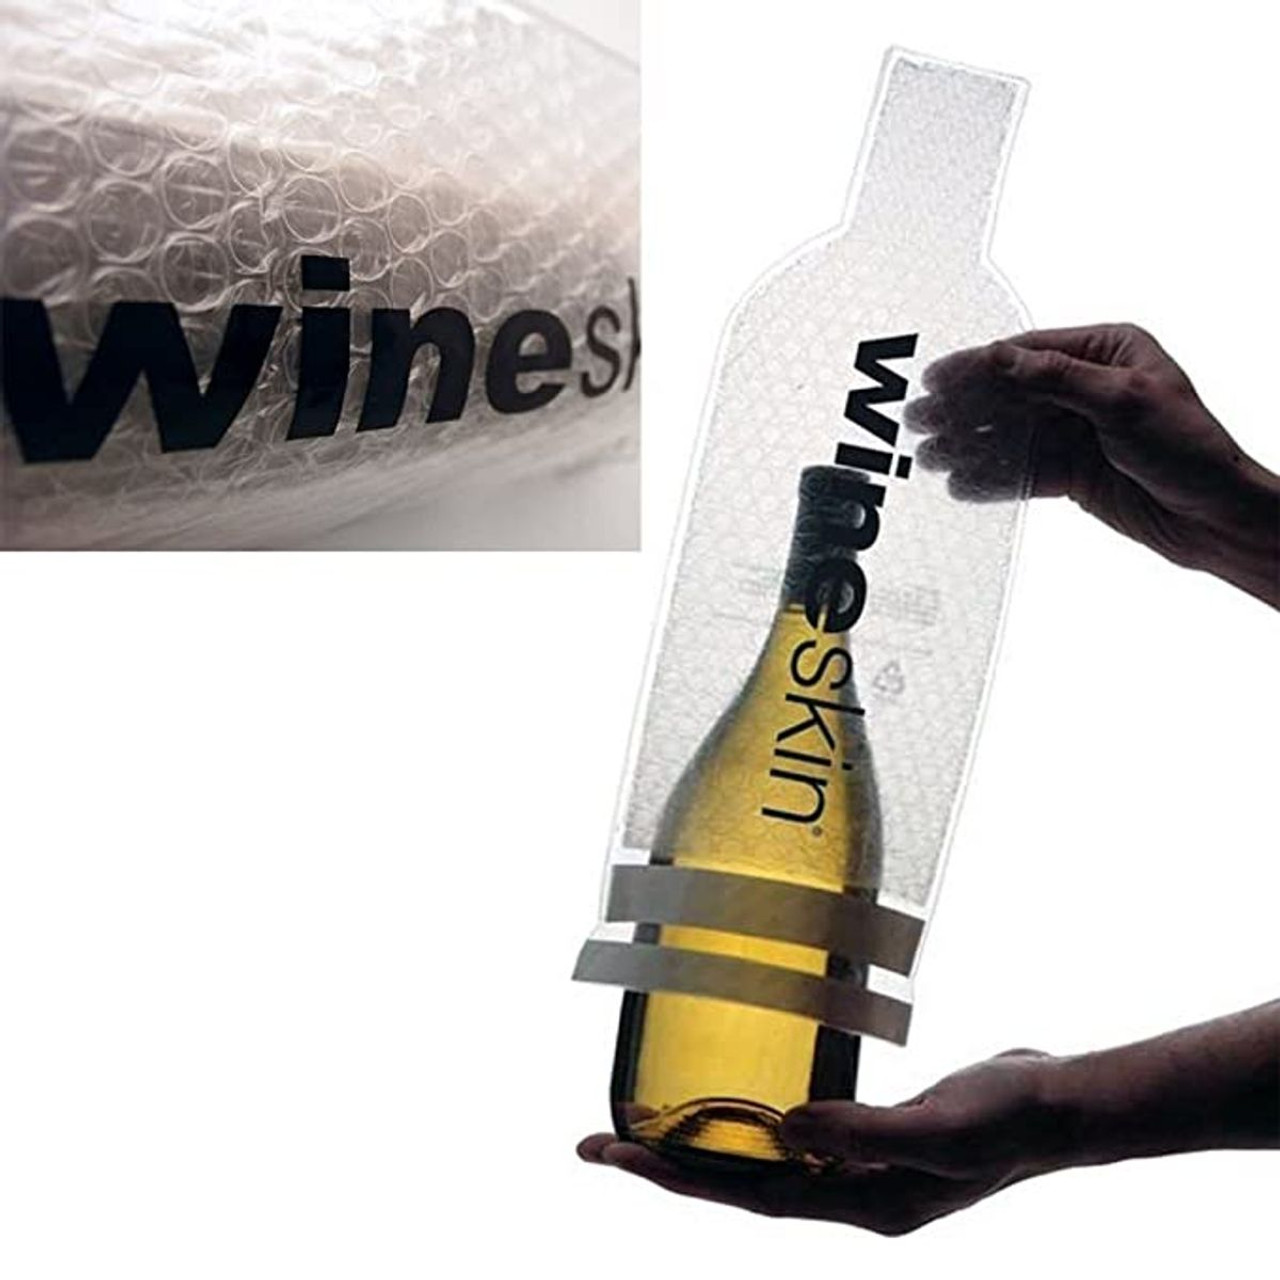 Wine Skin Travel Bag product image